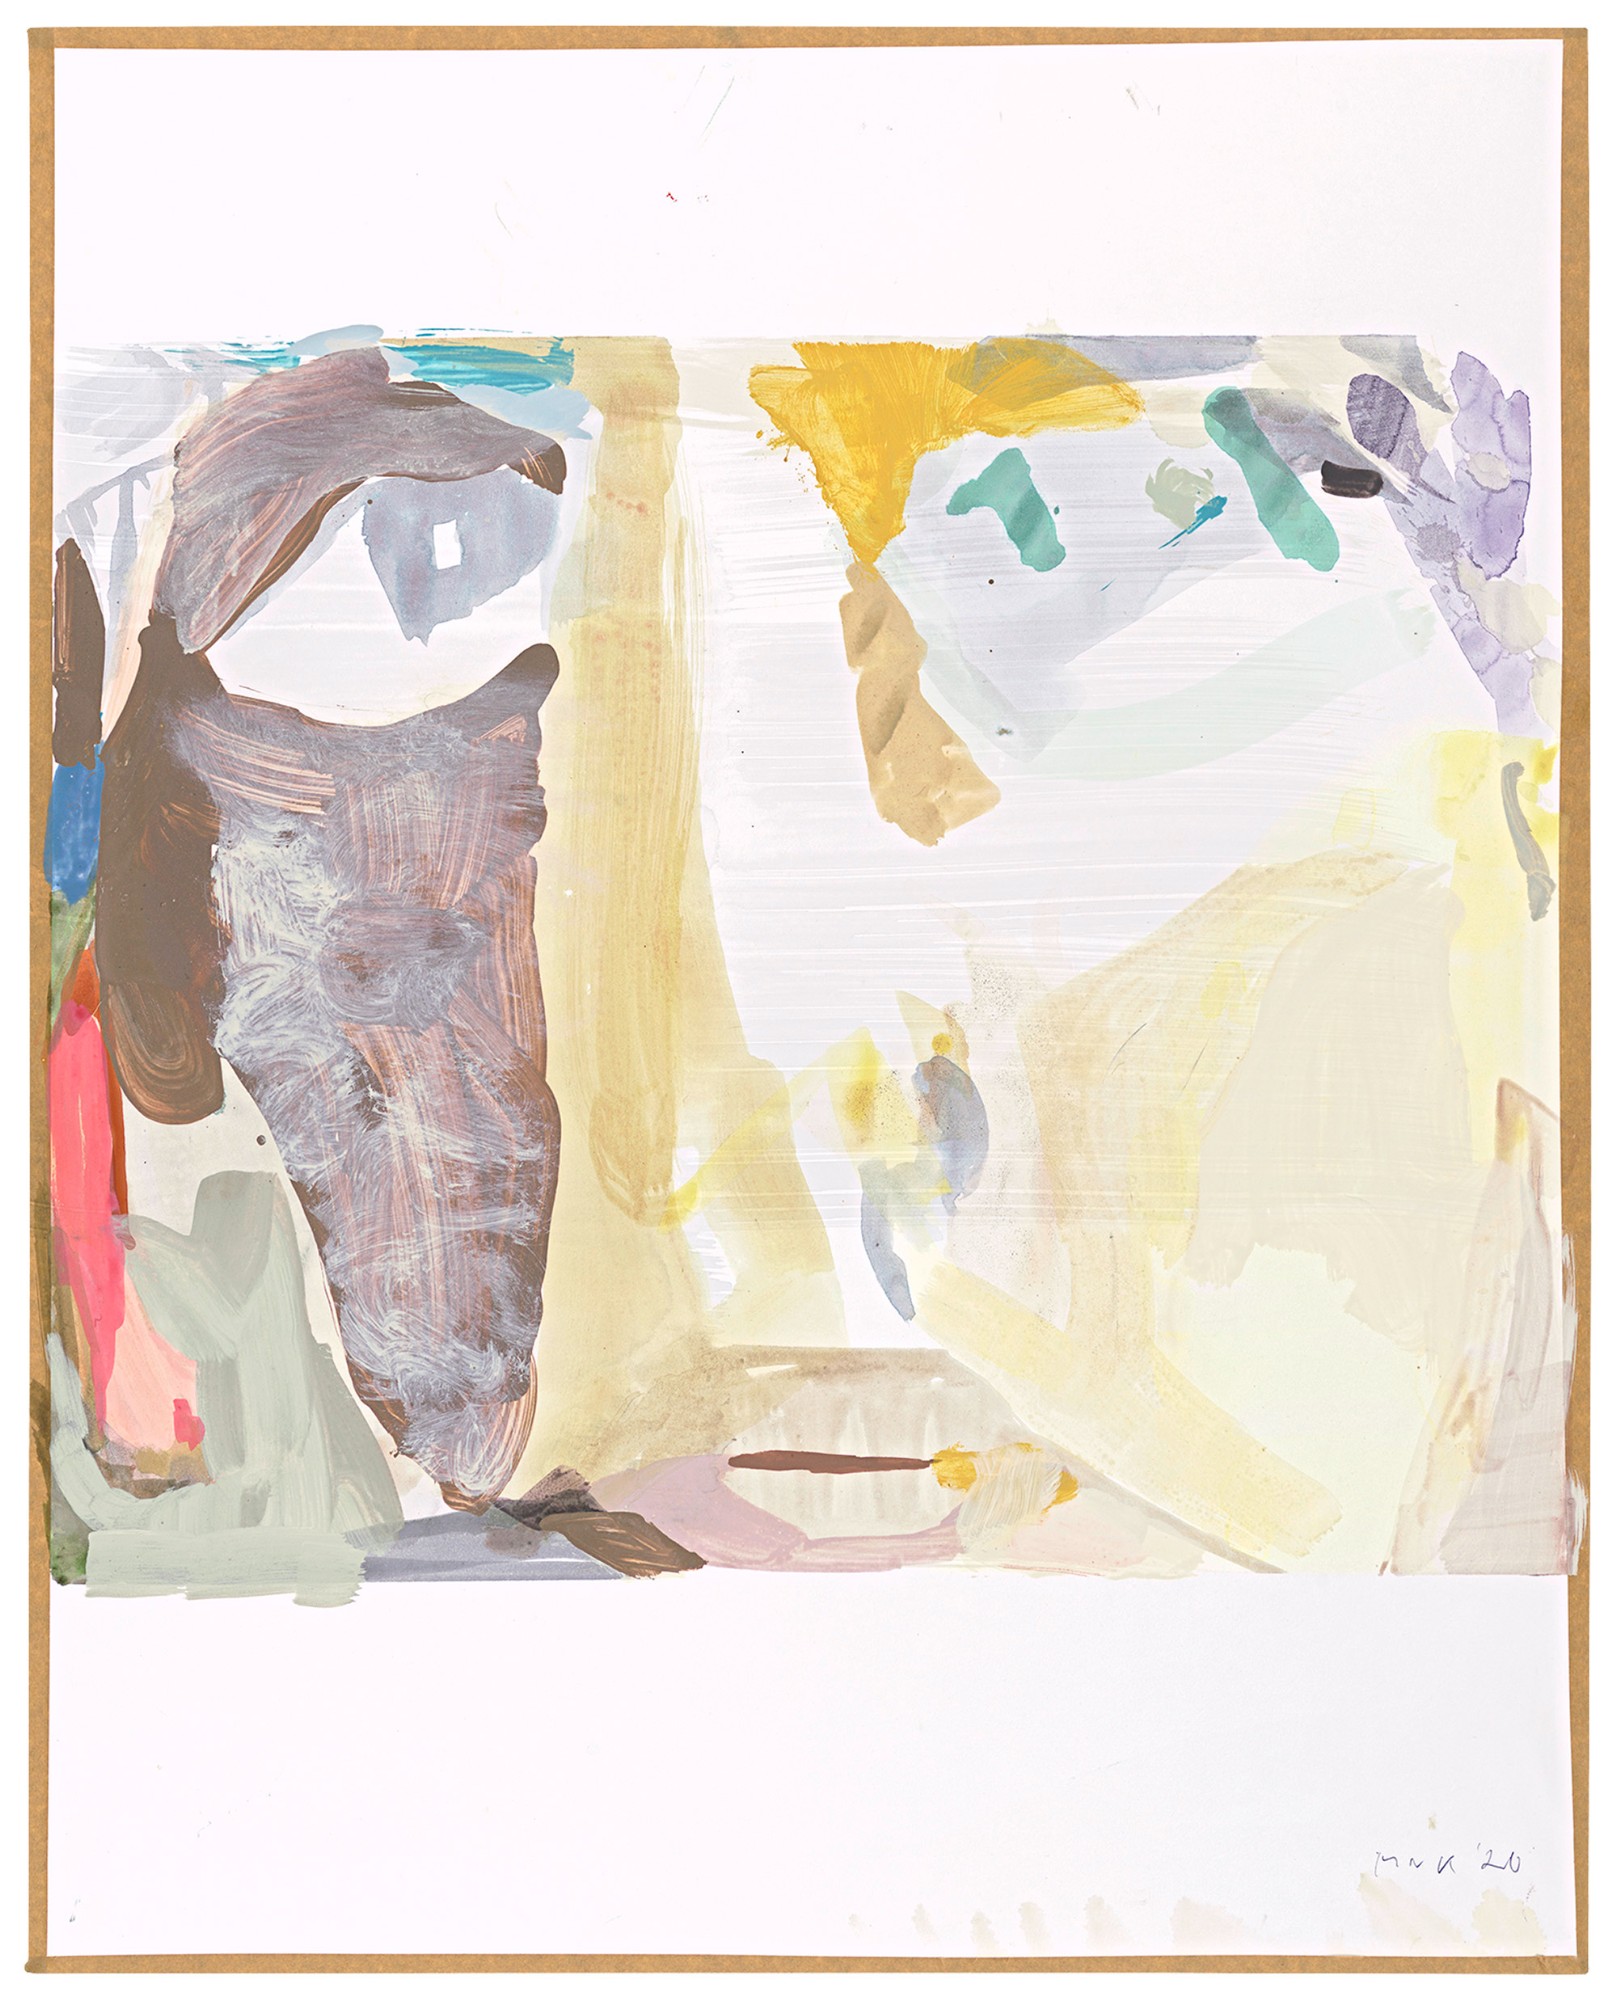 Maki Na Kamura, eteladnan, 2020, water and oil on paper, 100 x 80 cm